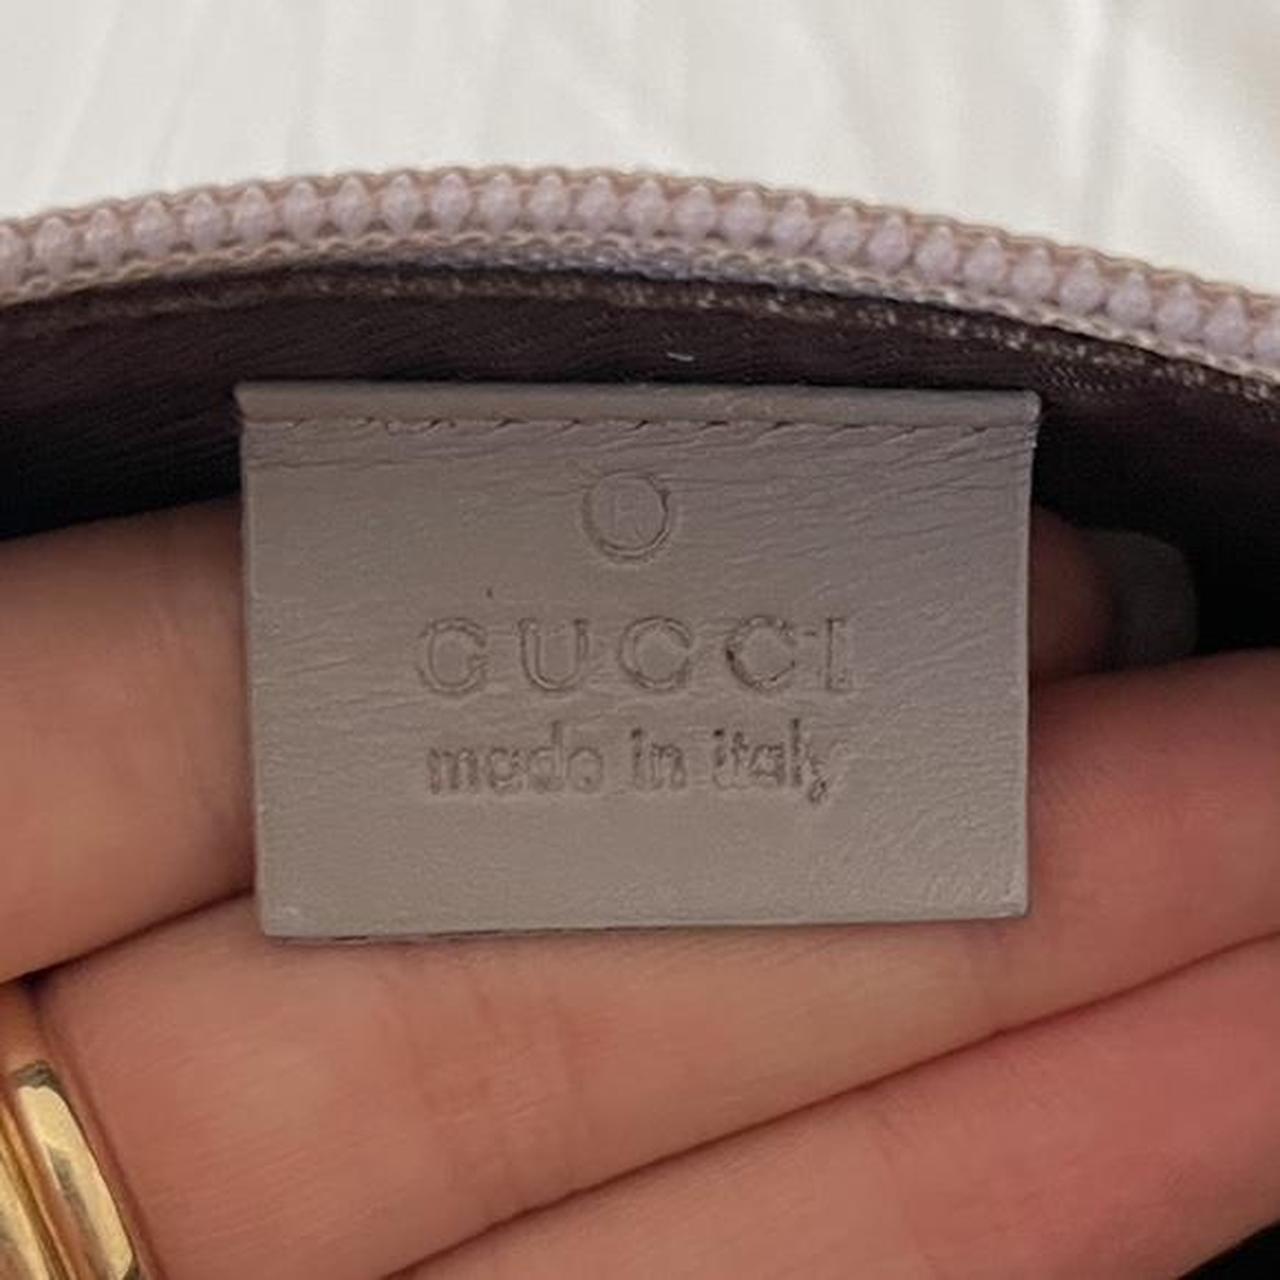 Red Gucci monogram boat bag no damages stains or tears - Depop